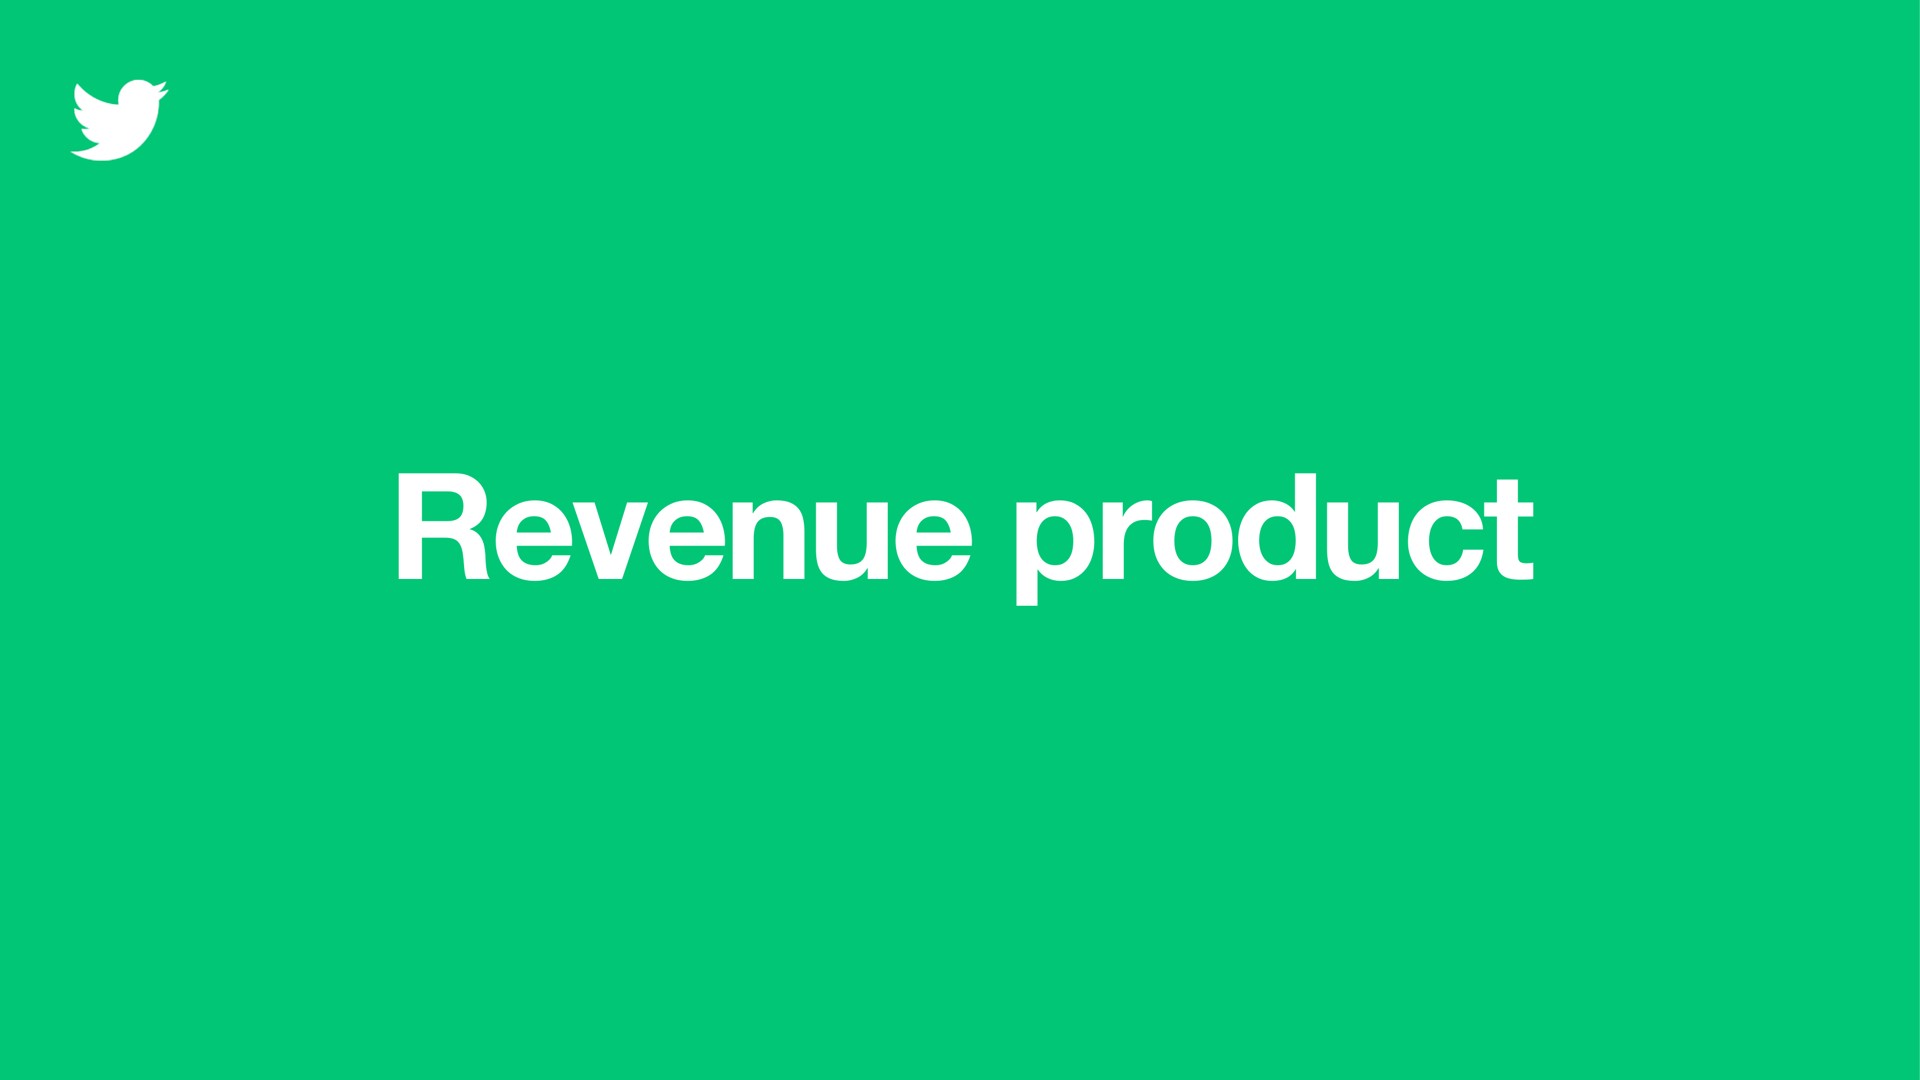 revenue product | Twitter